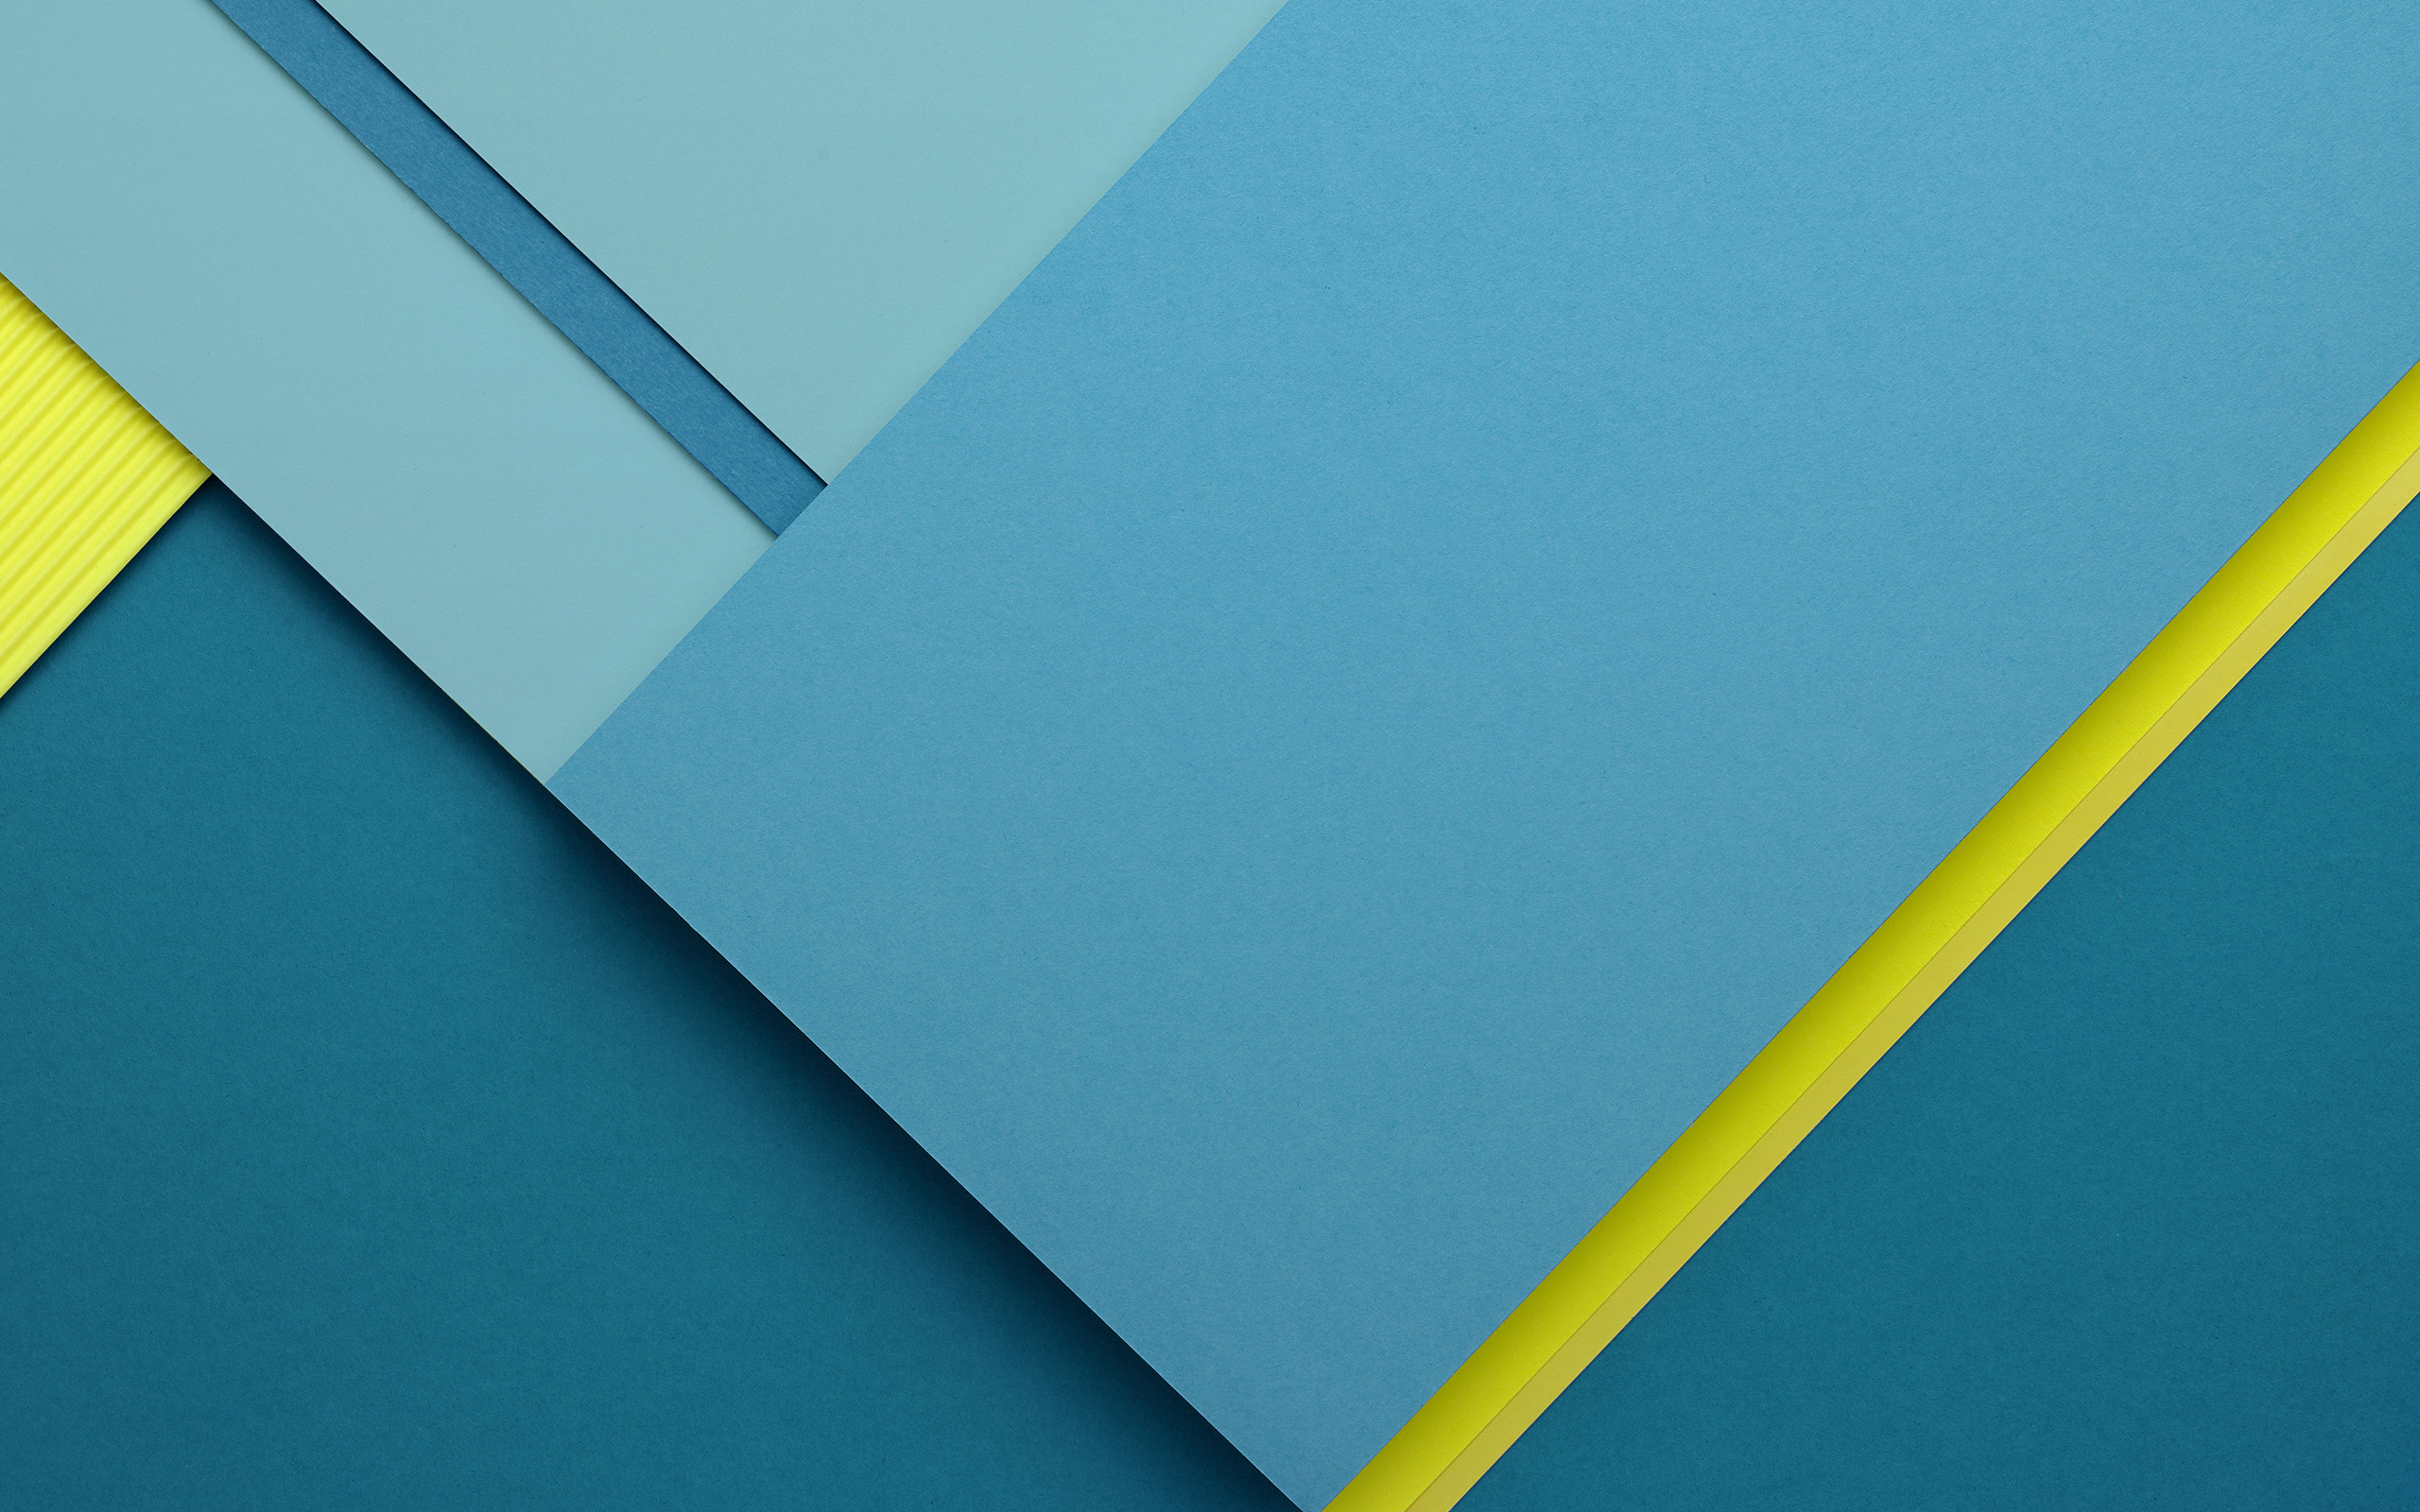 Here Is The Material Design Default Wallpaper For Chromebooks